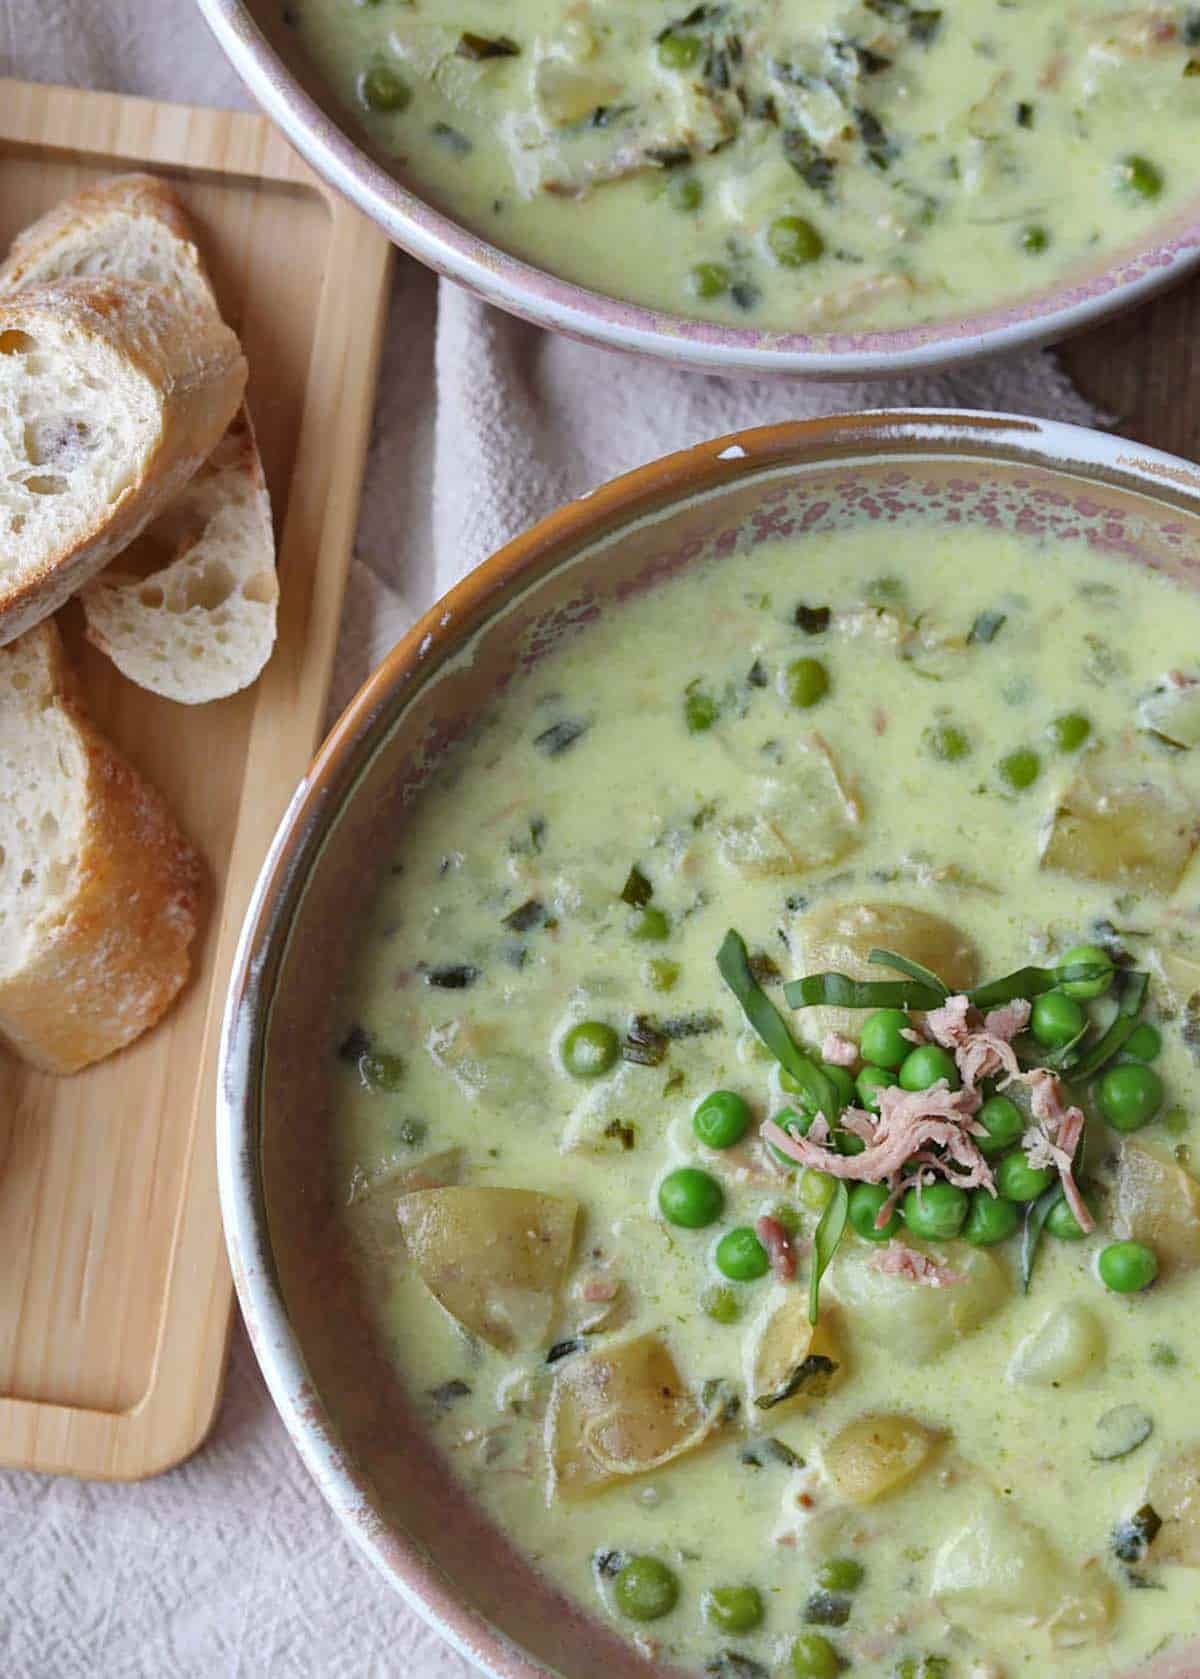 Creamy Wild Garlic Soup with peas